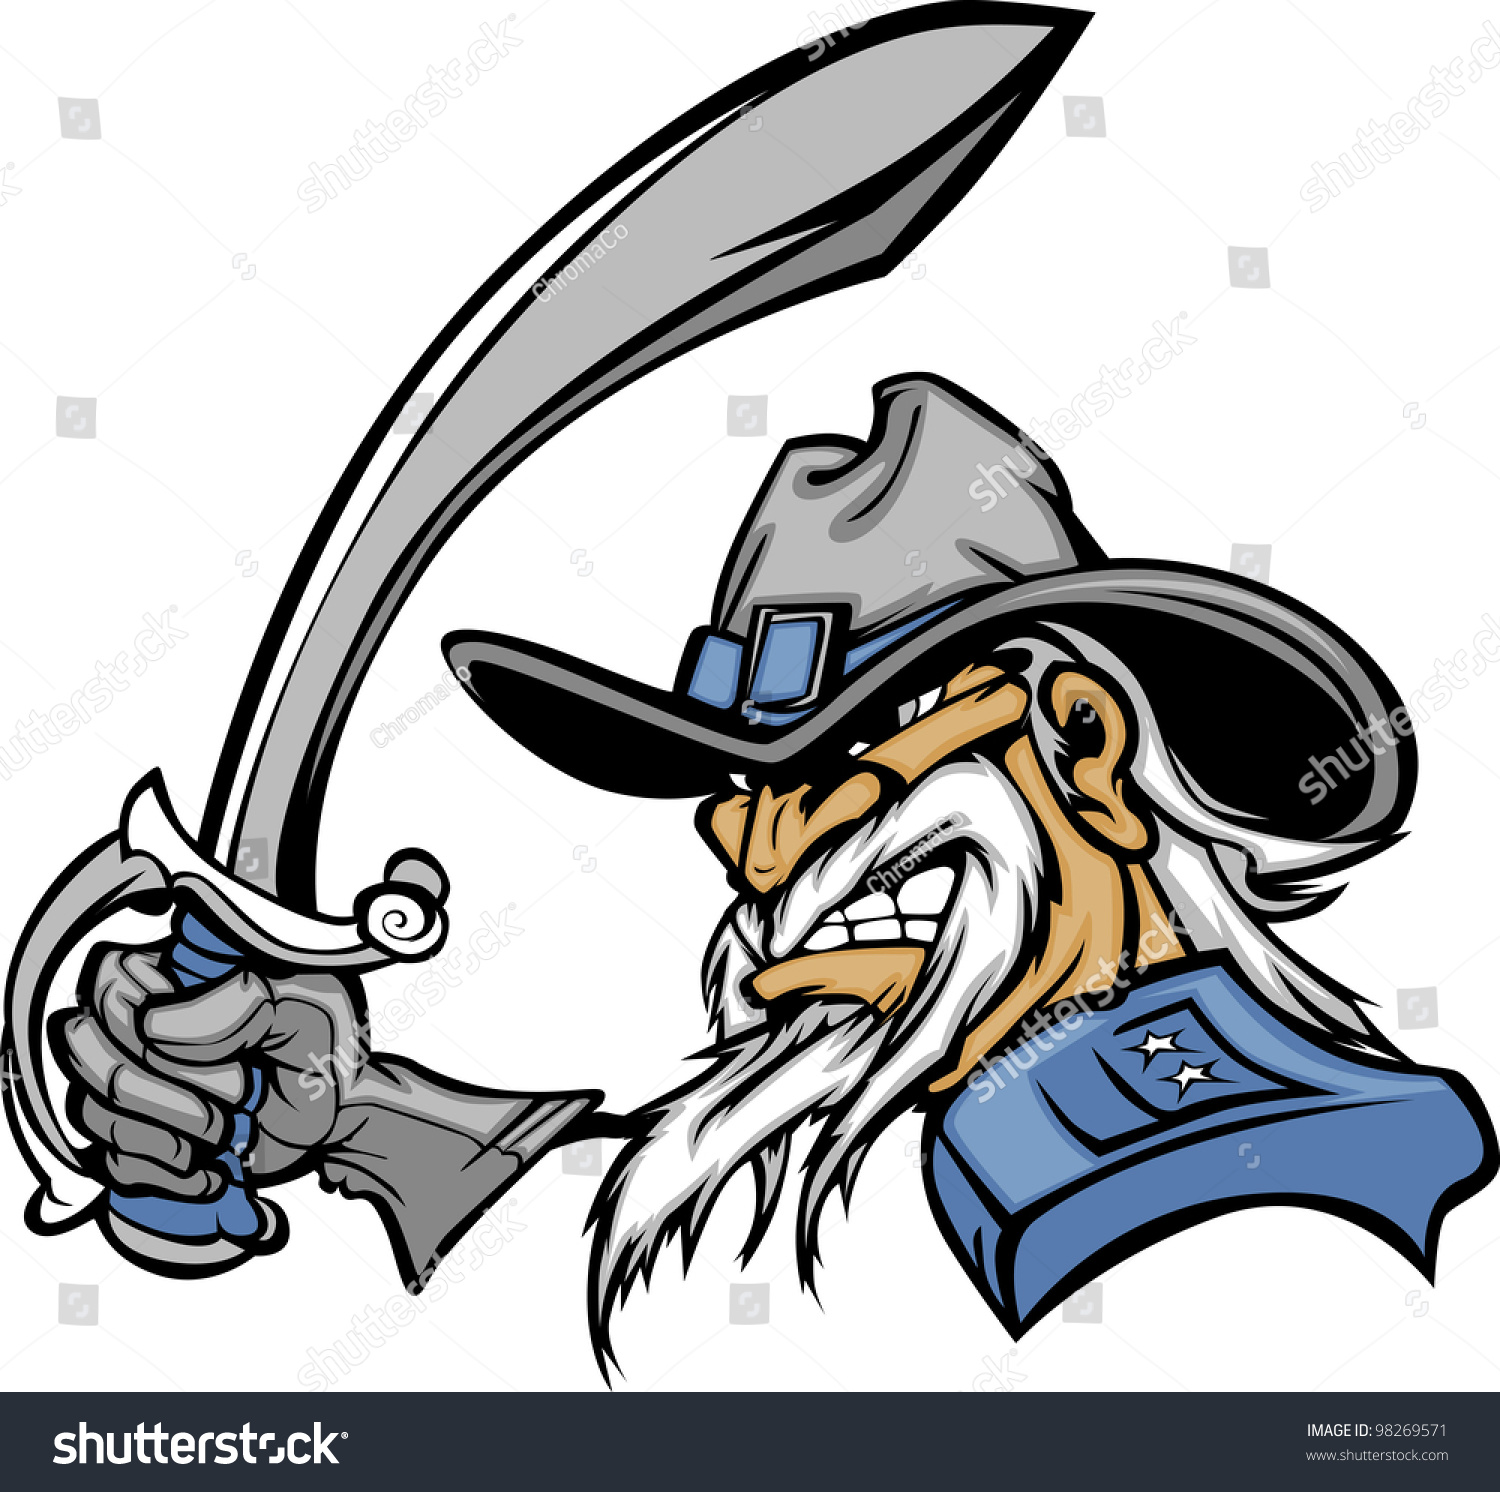 SVG of General or Civil War Soldier Cartoon Vector Mascot Holding a Sword svg